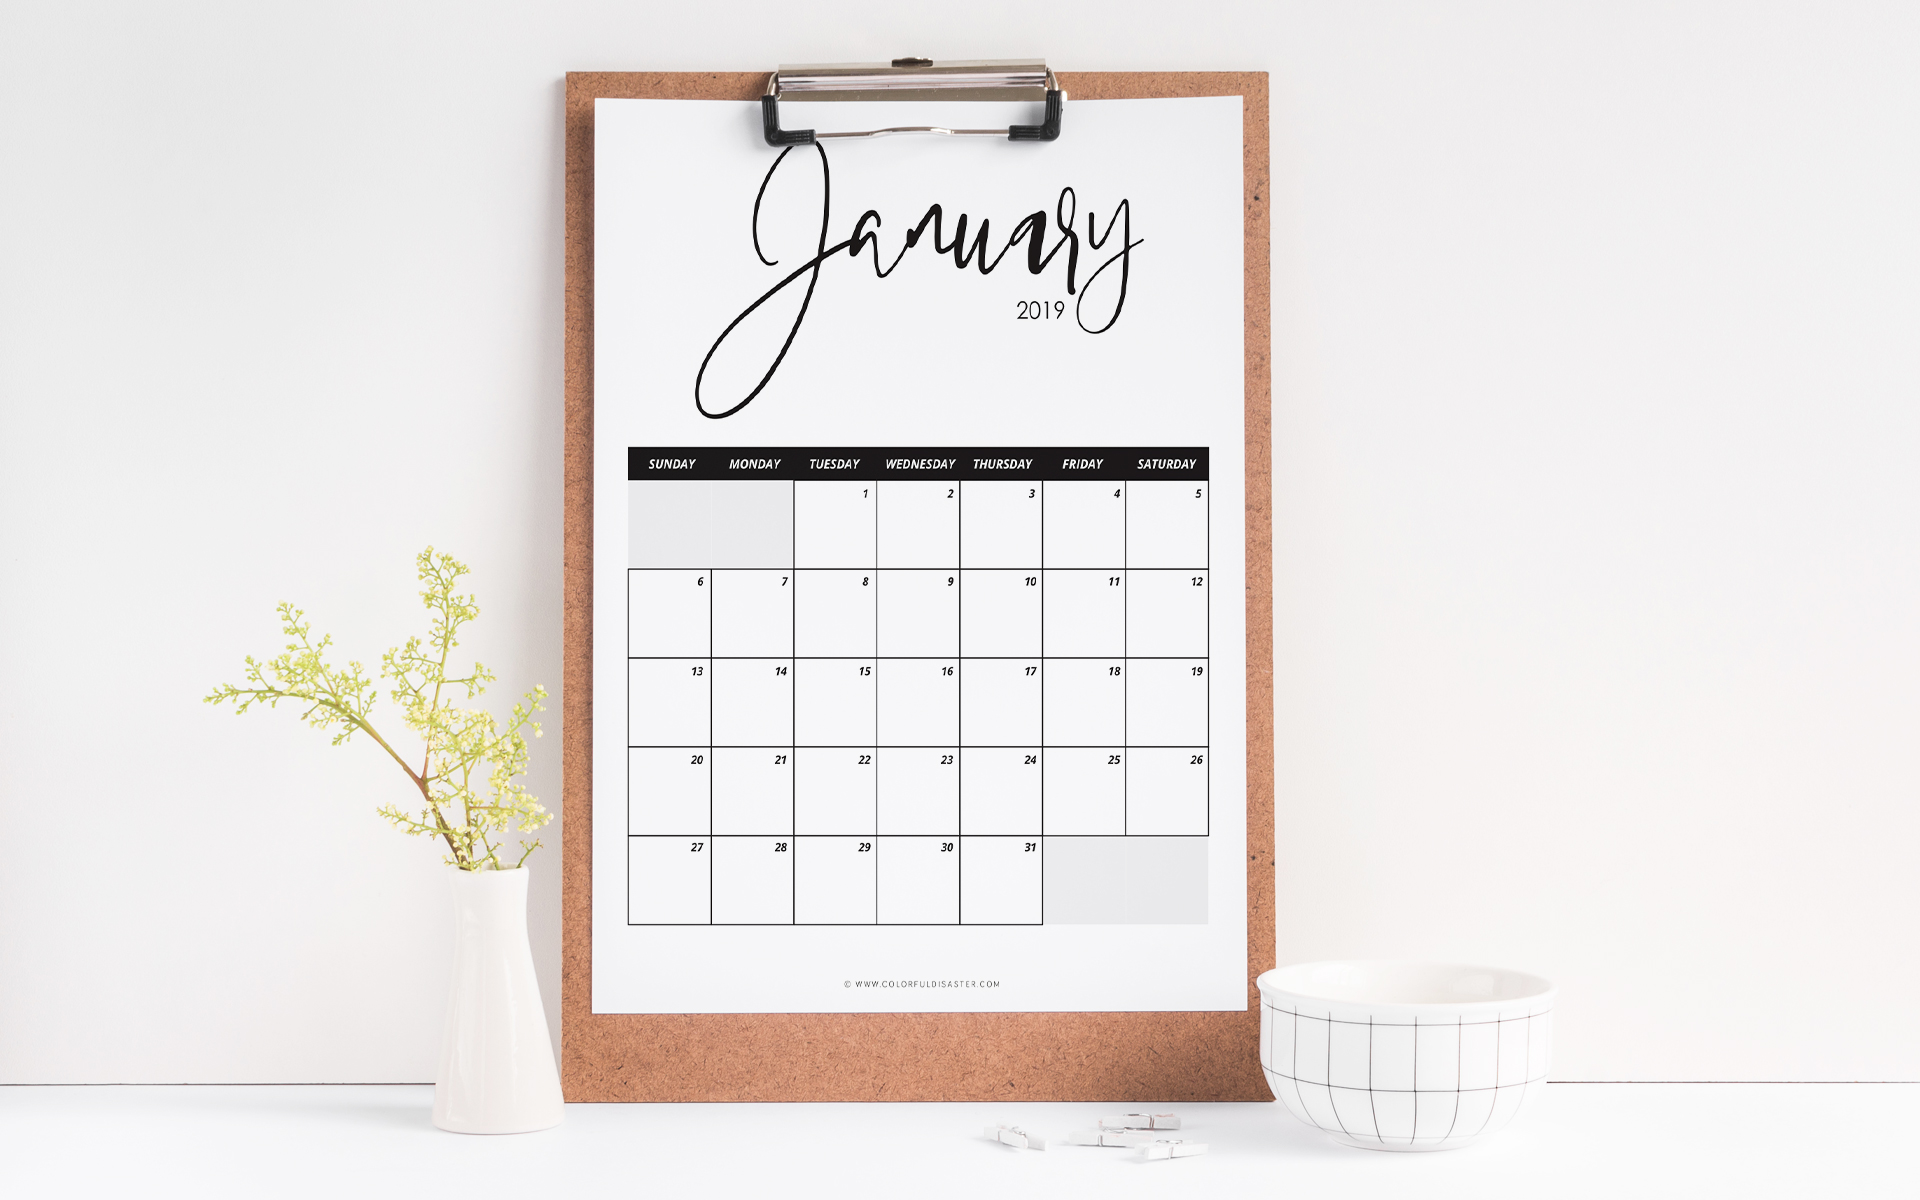 Monthly Printable Calendar 2019